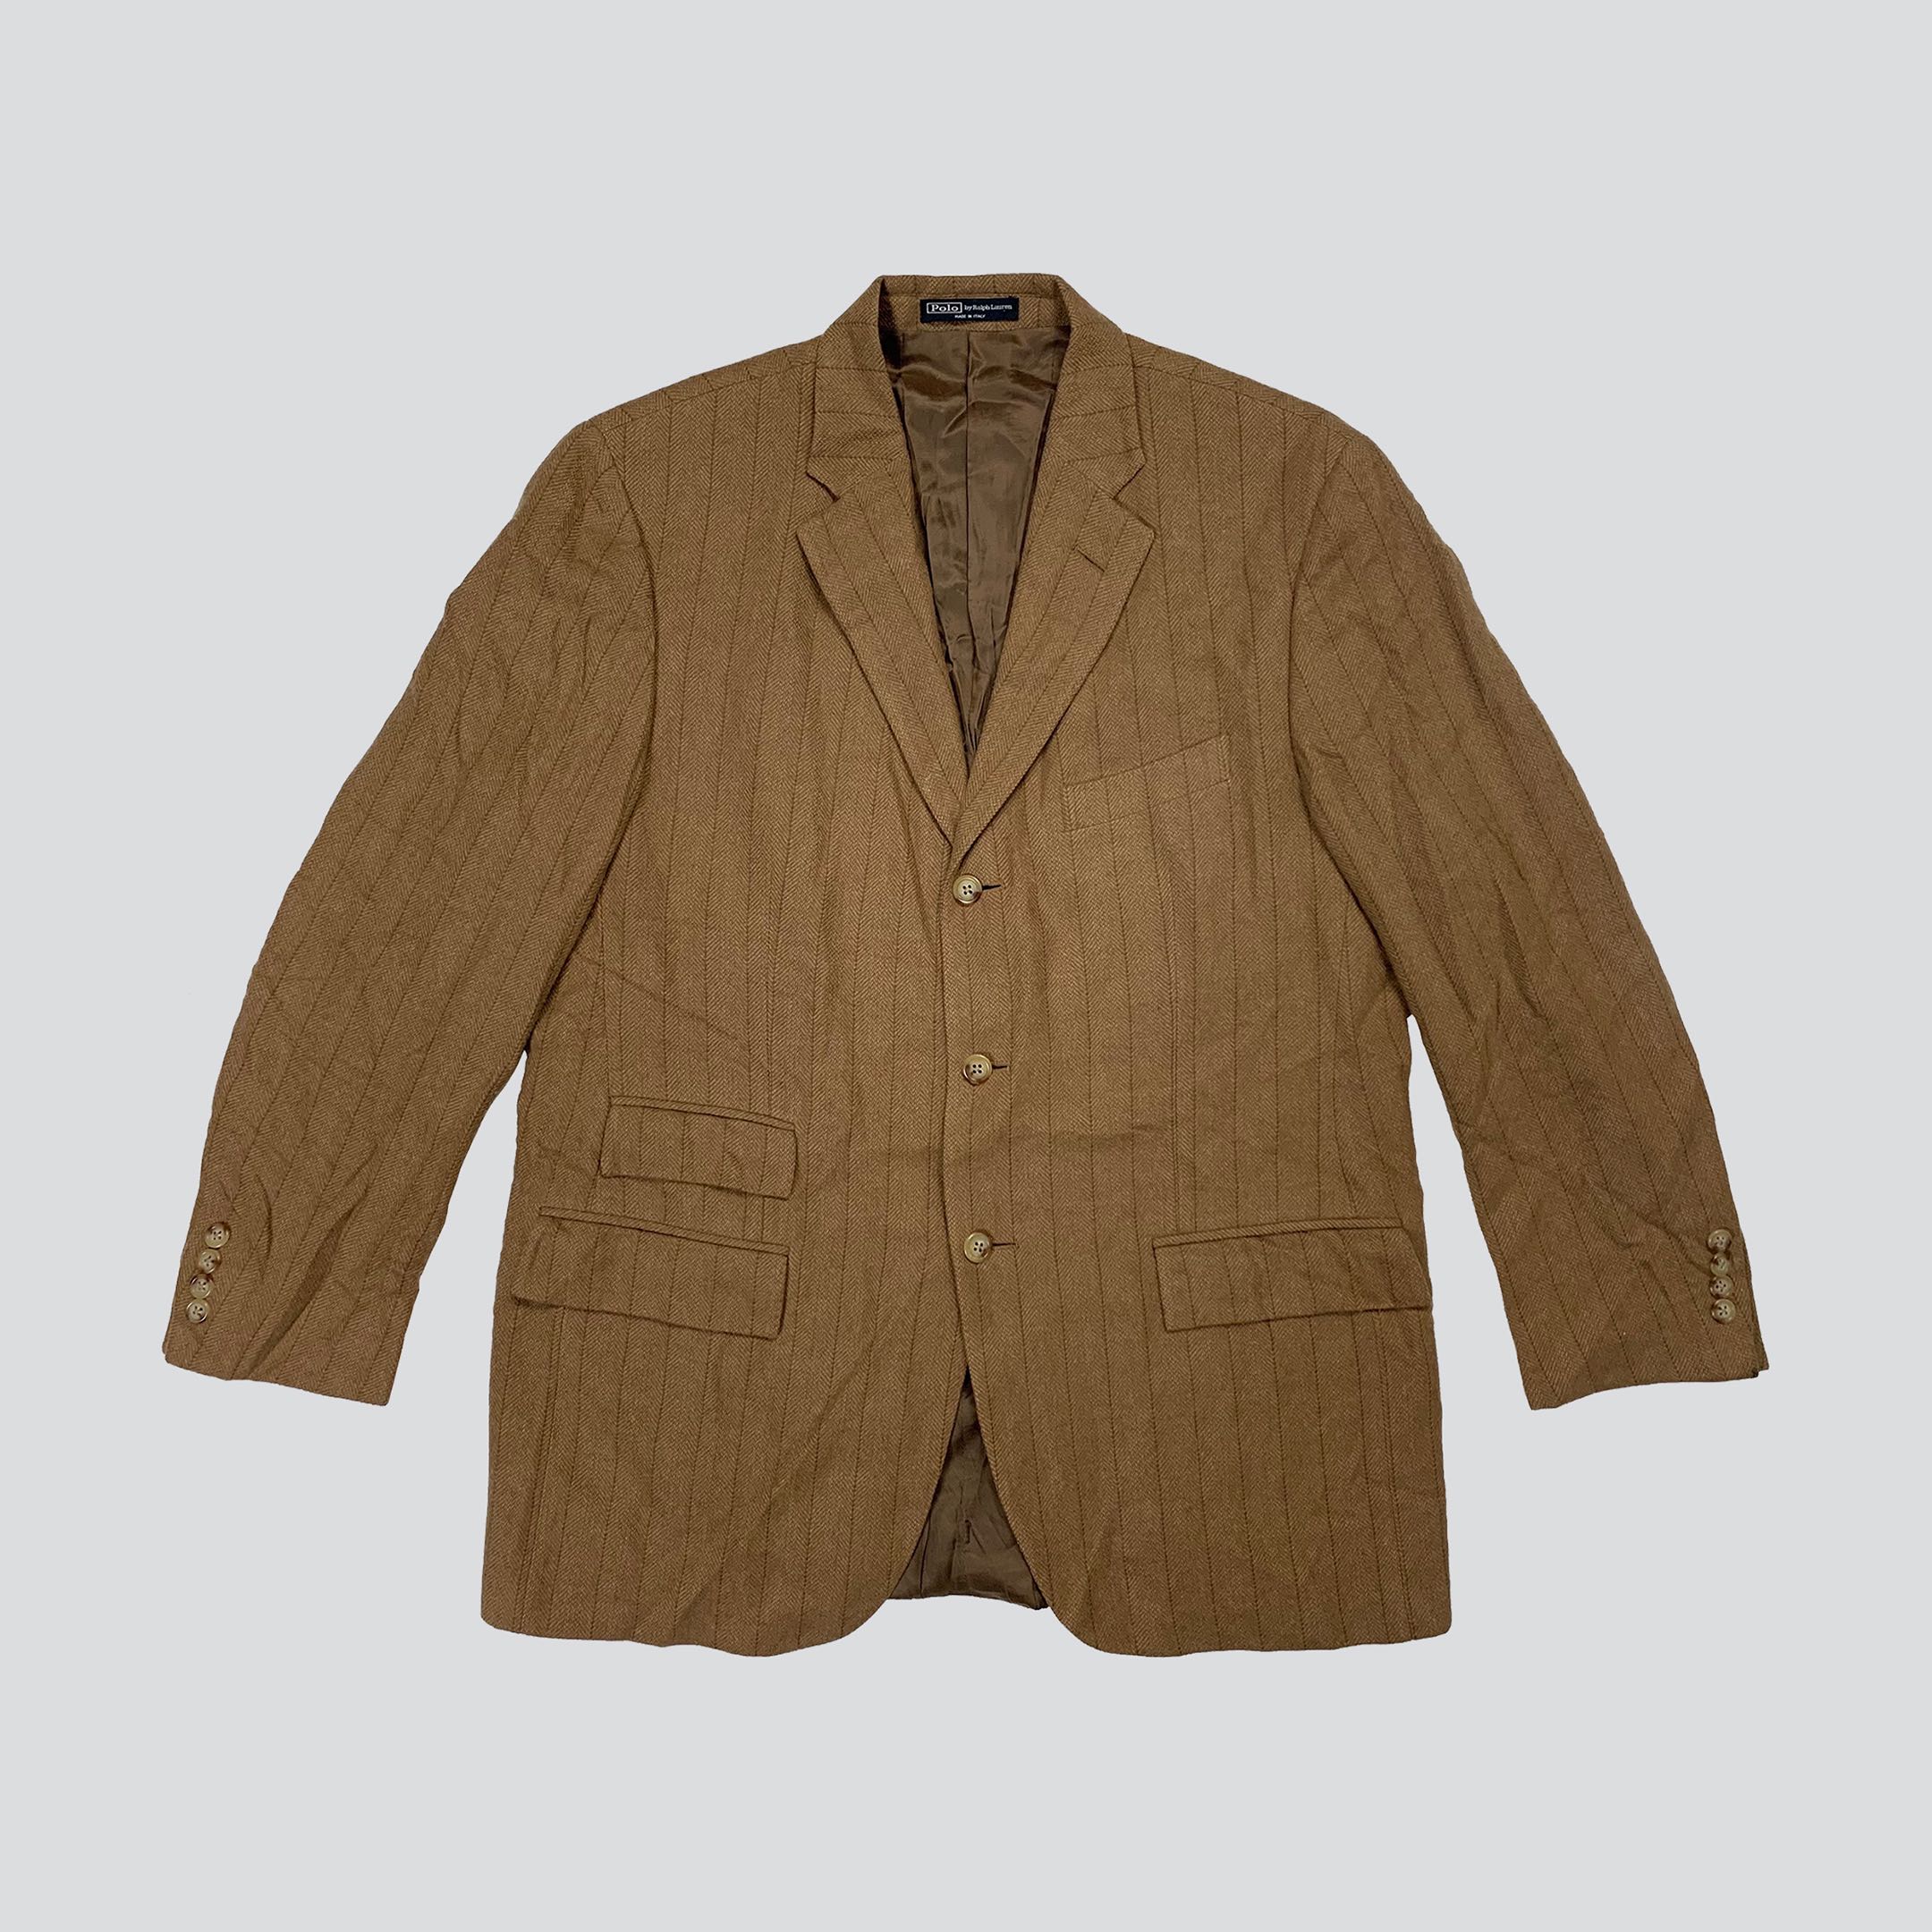 Vintage Polo by Ralph Lauren Blazer Polo IV Cashmere Sport Blazer Men Size 42R Classic Suit Brown Chic Fashion Jacket - 1